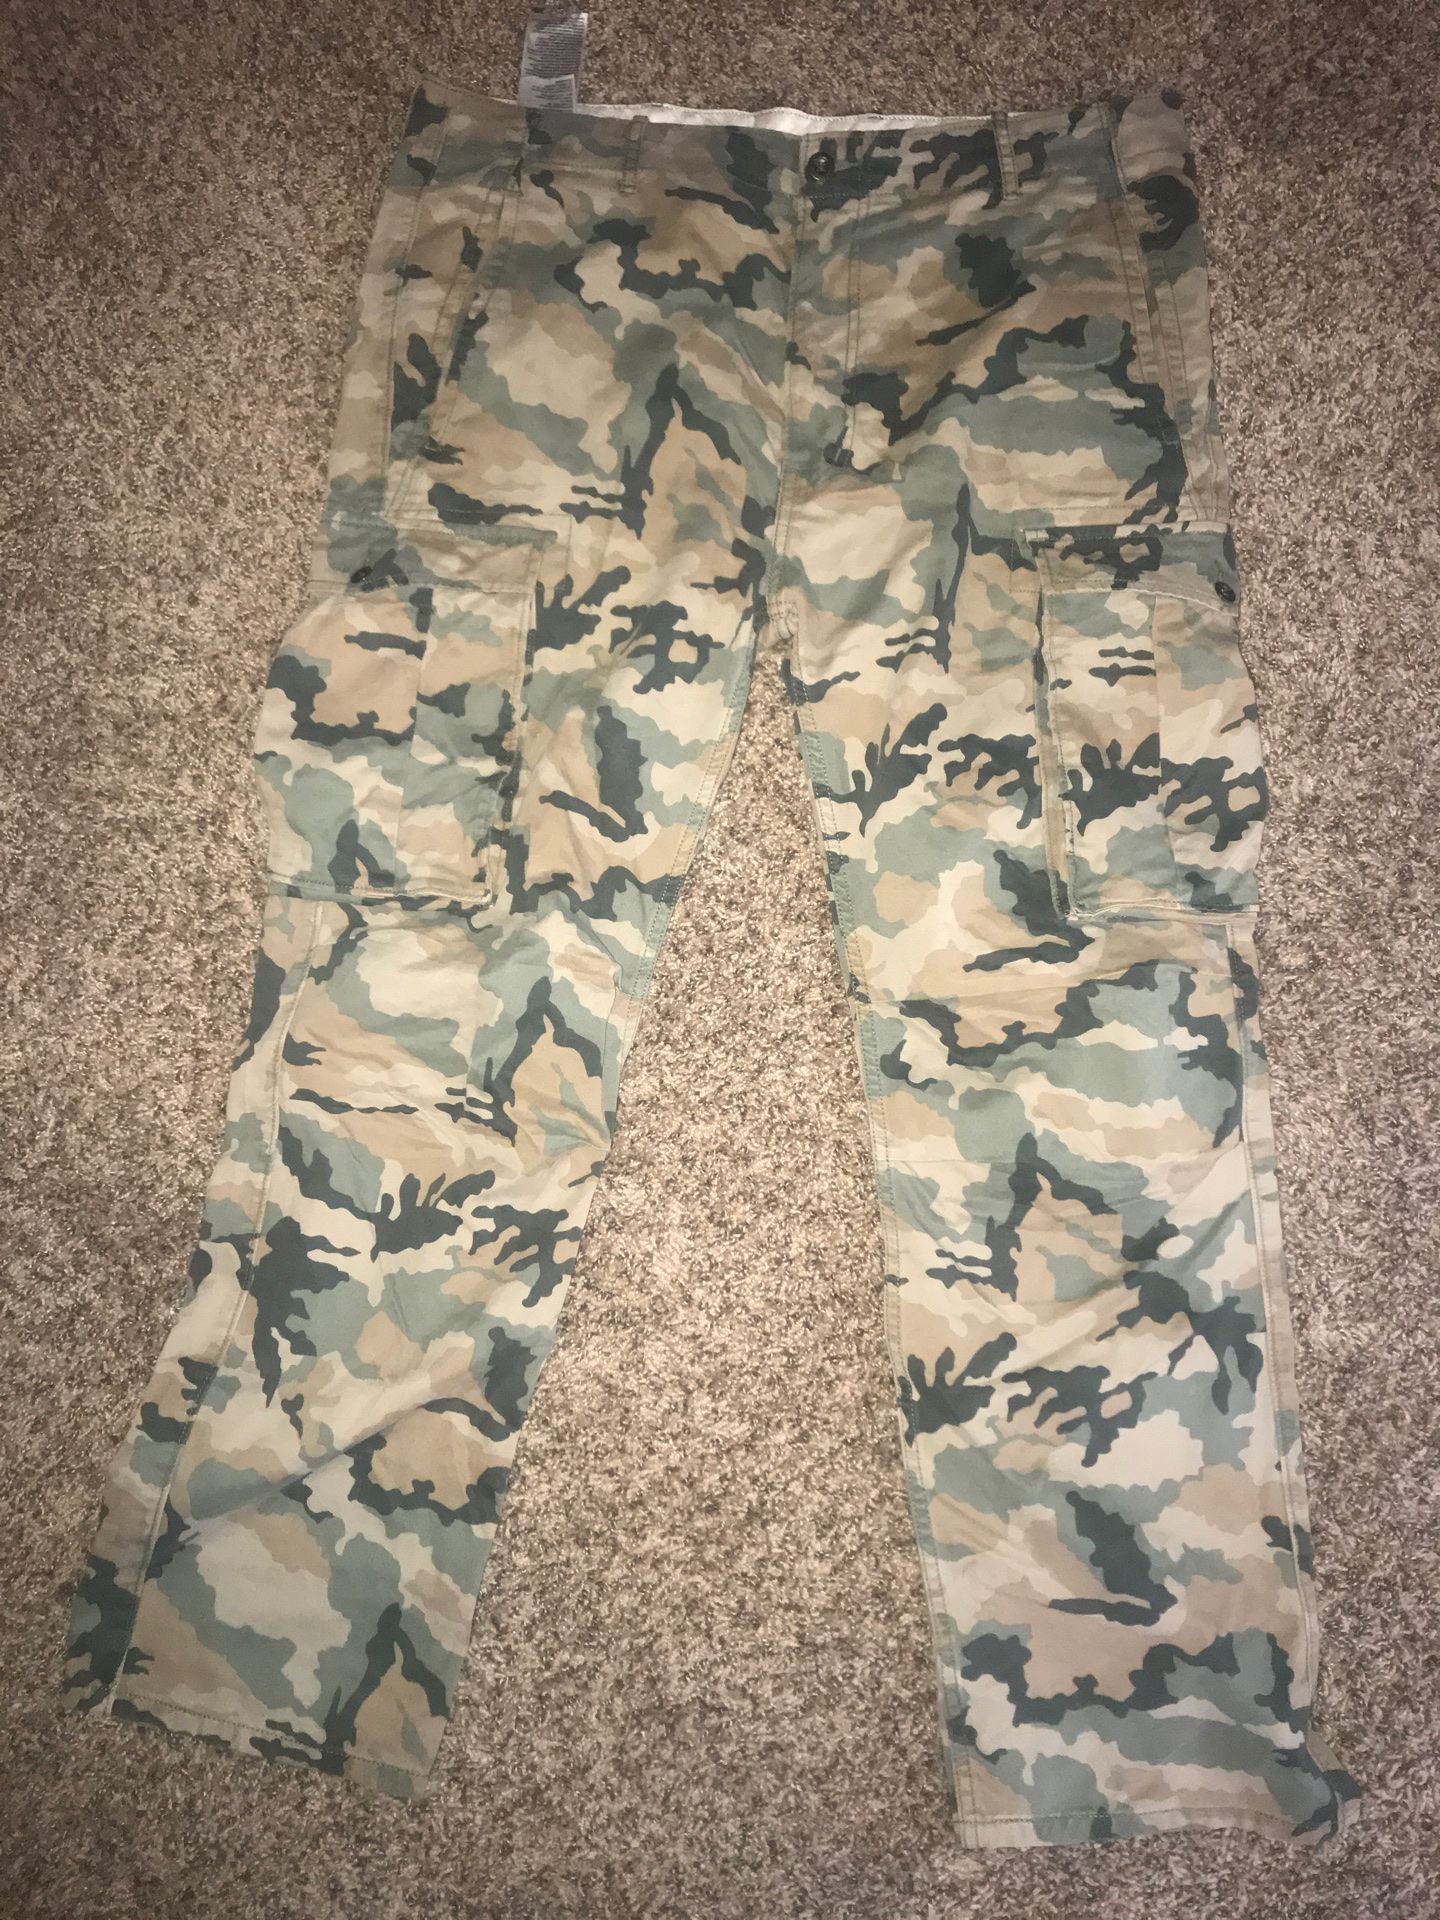 Levi’s camo camouflage pants